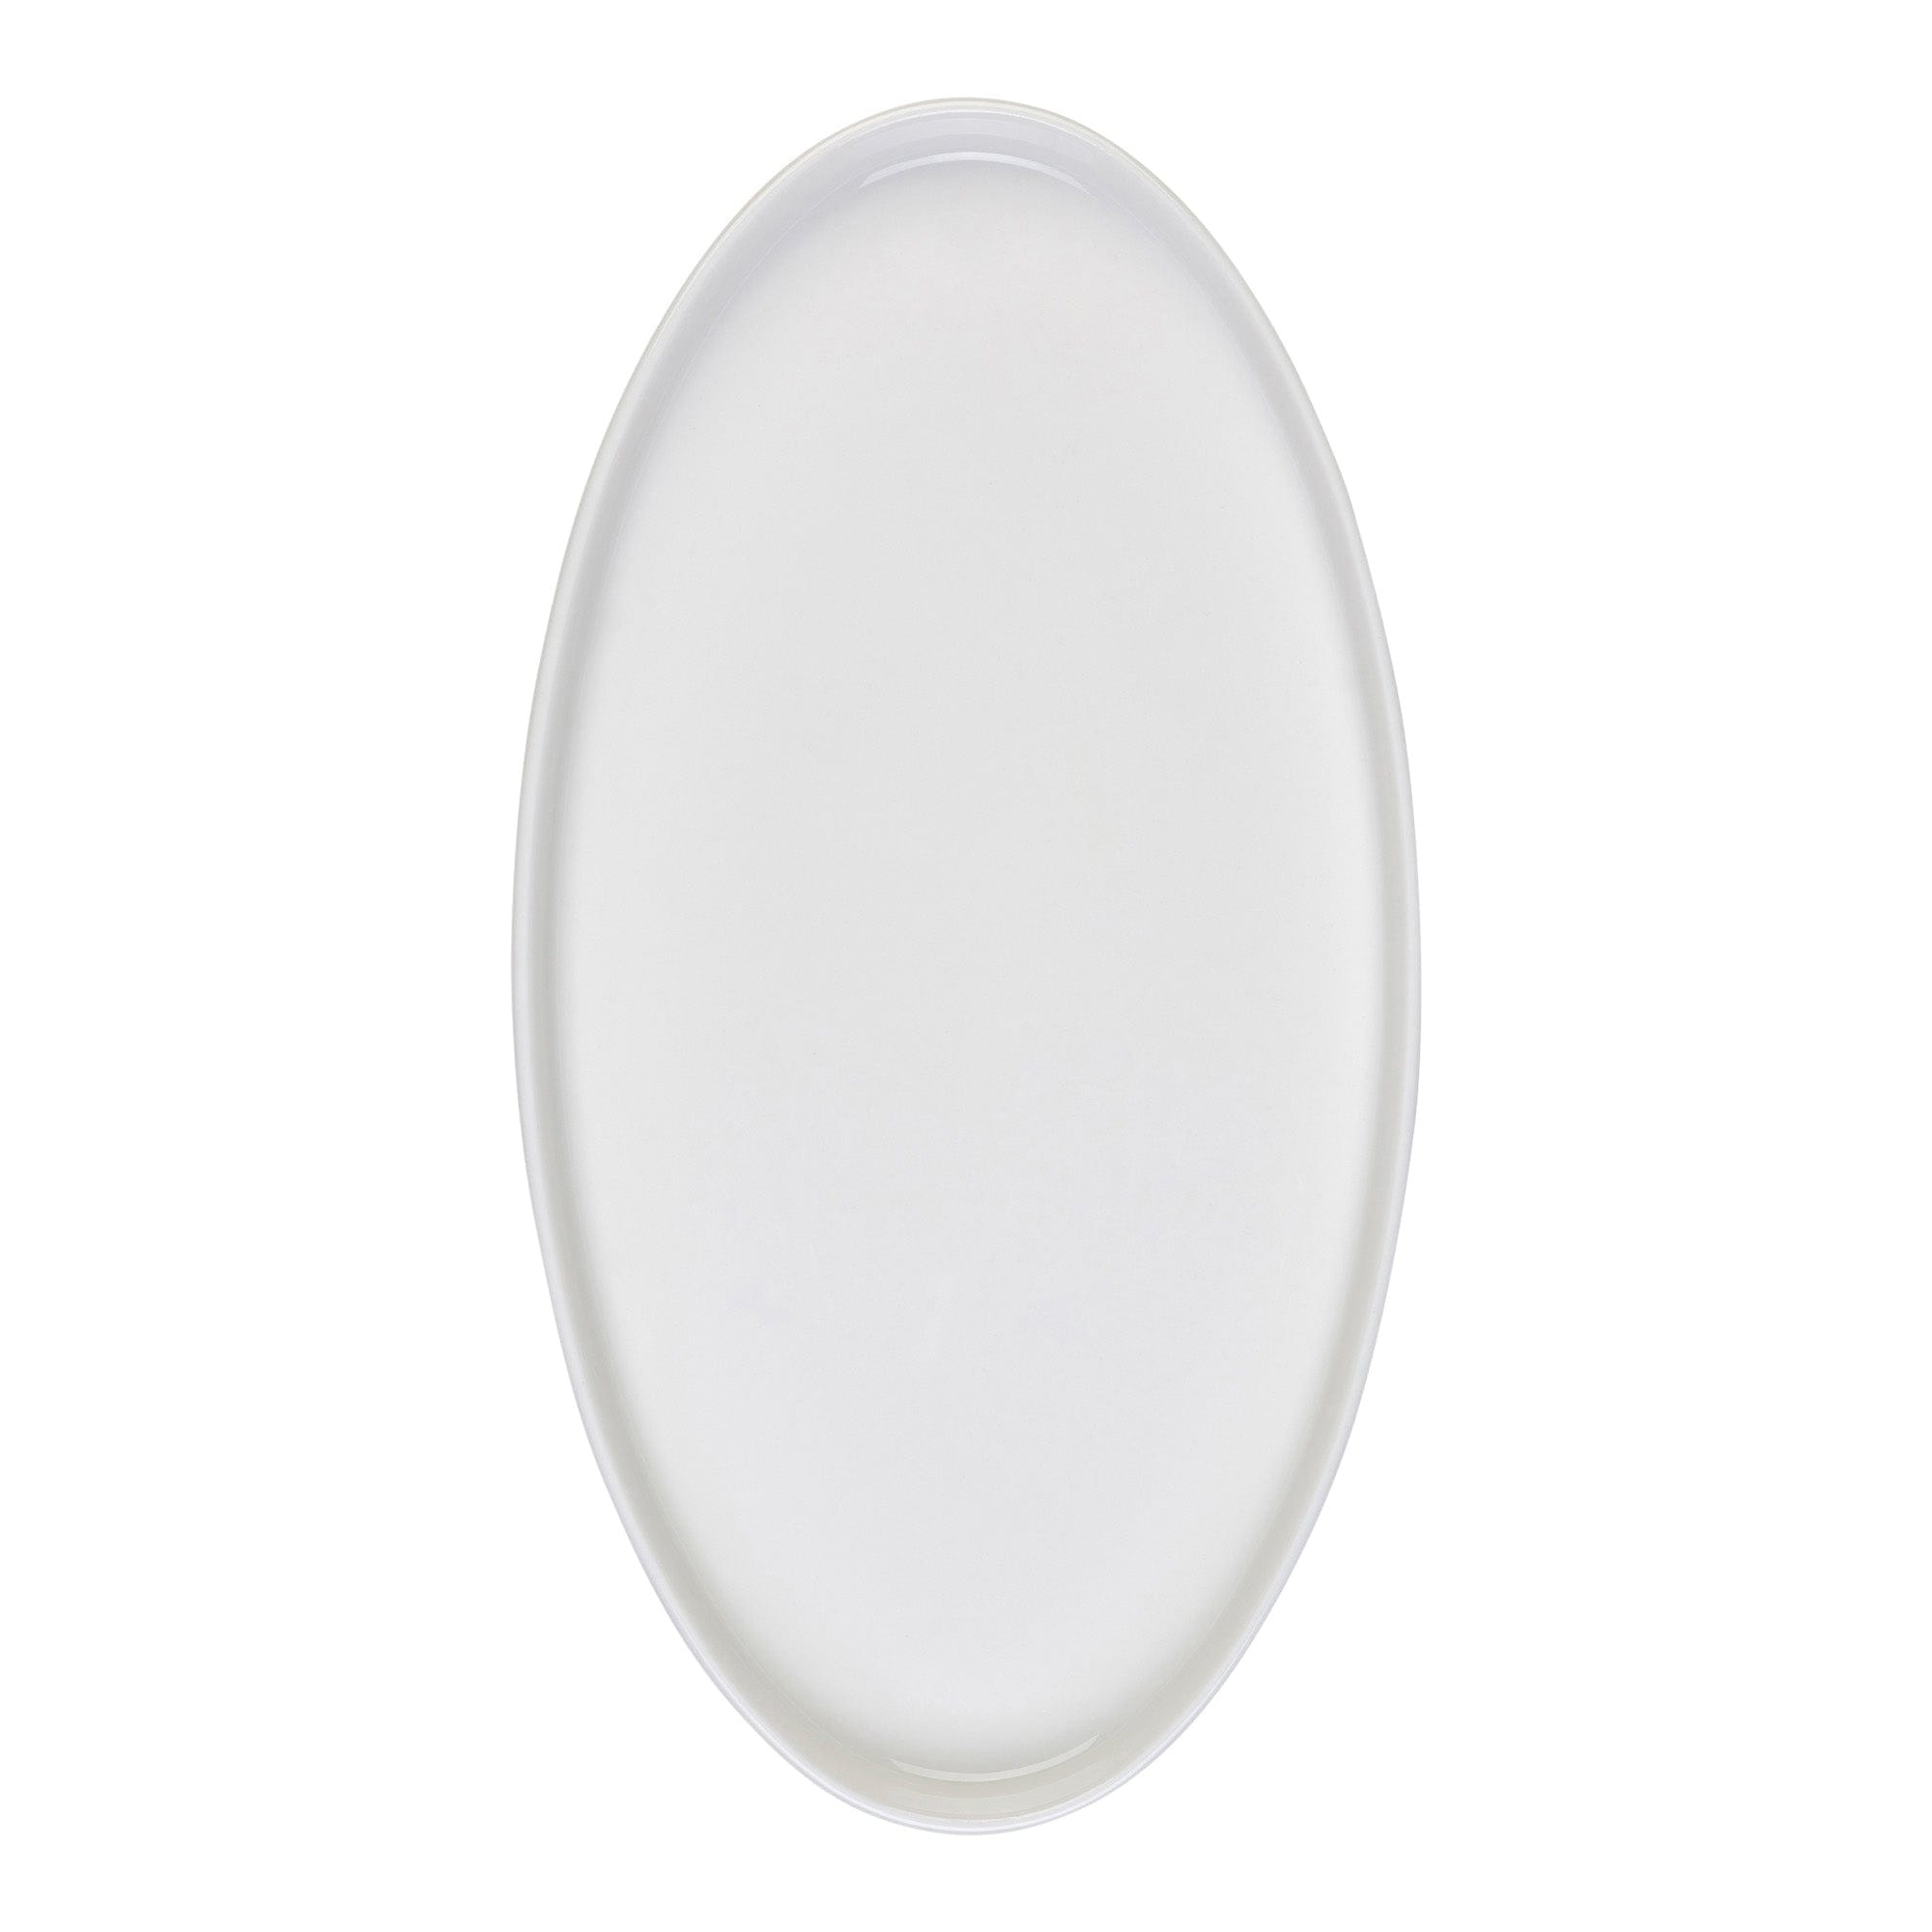 Stolt Porcelain Oval Platter  12.6"x6.8"